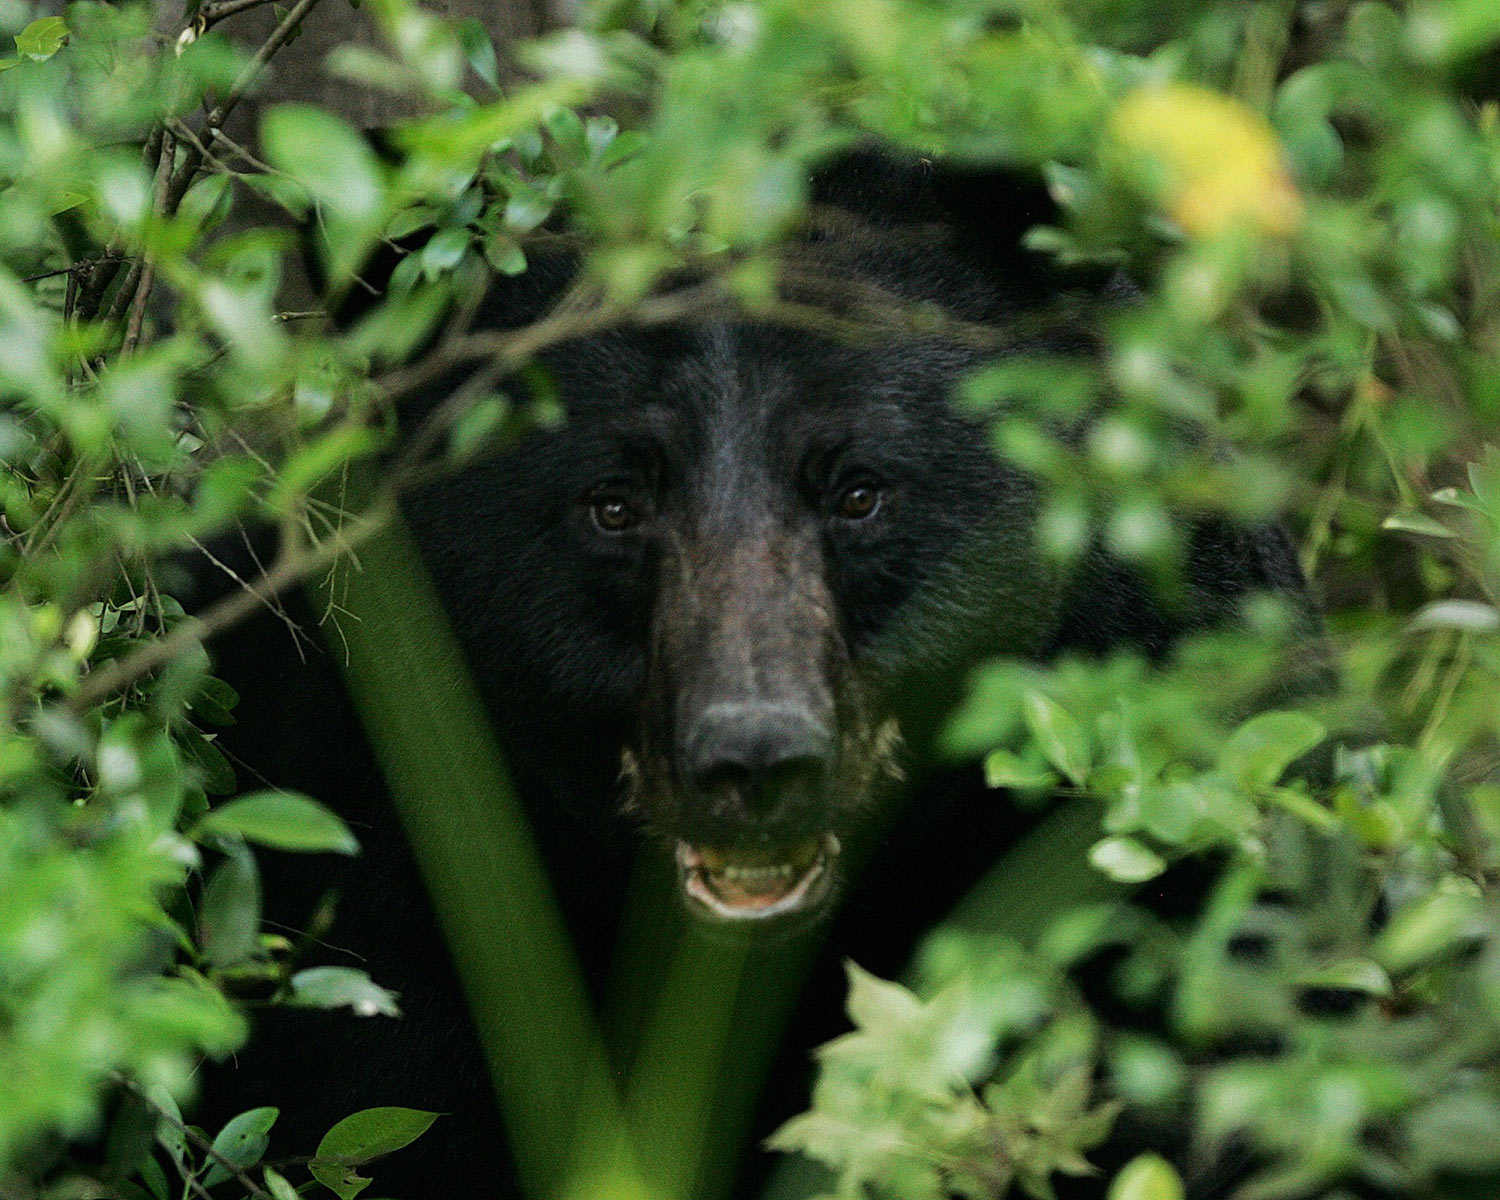 A black bear hiding in brush cover